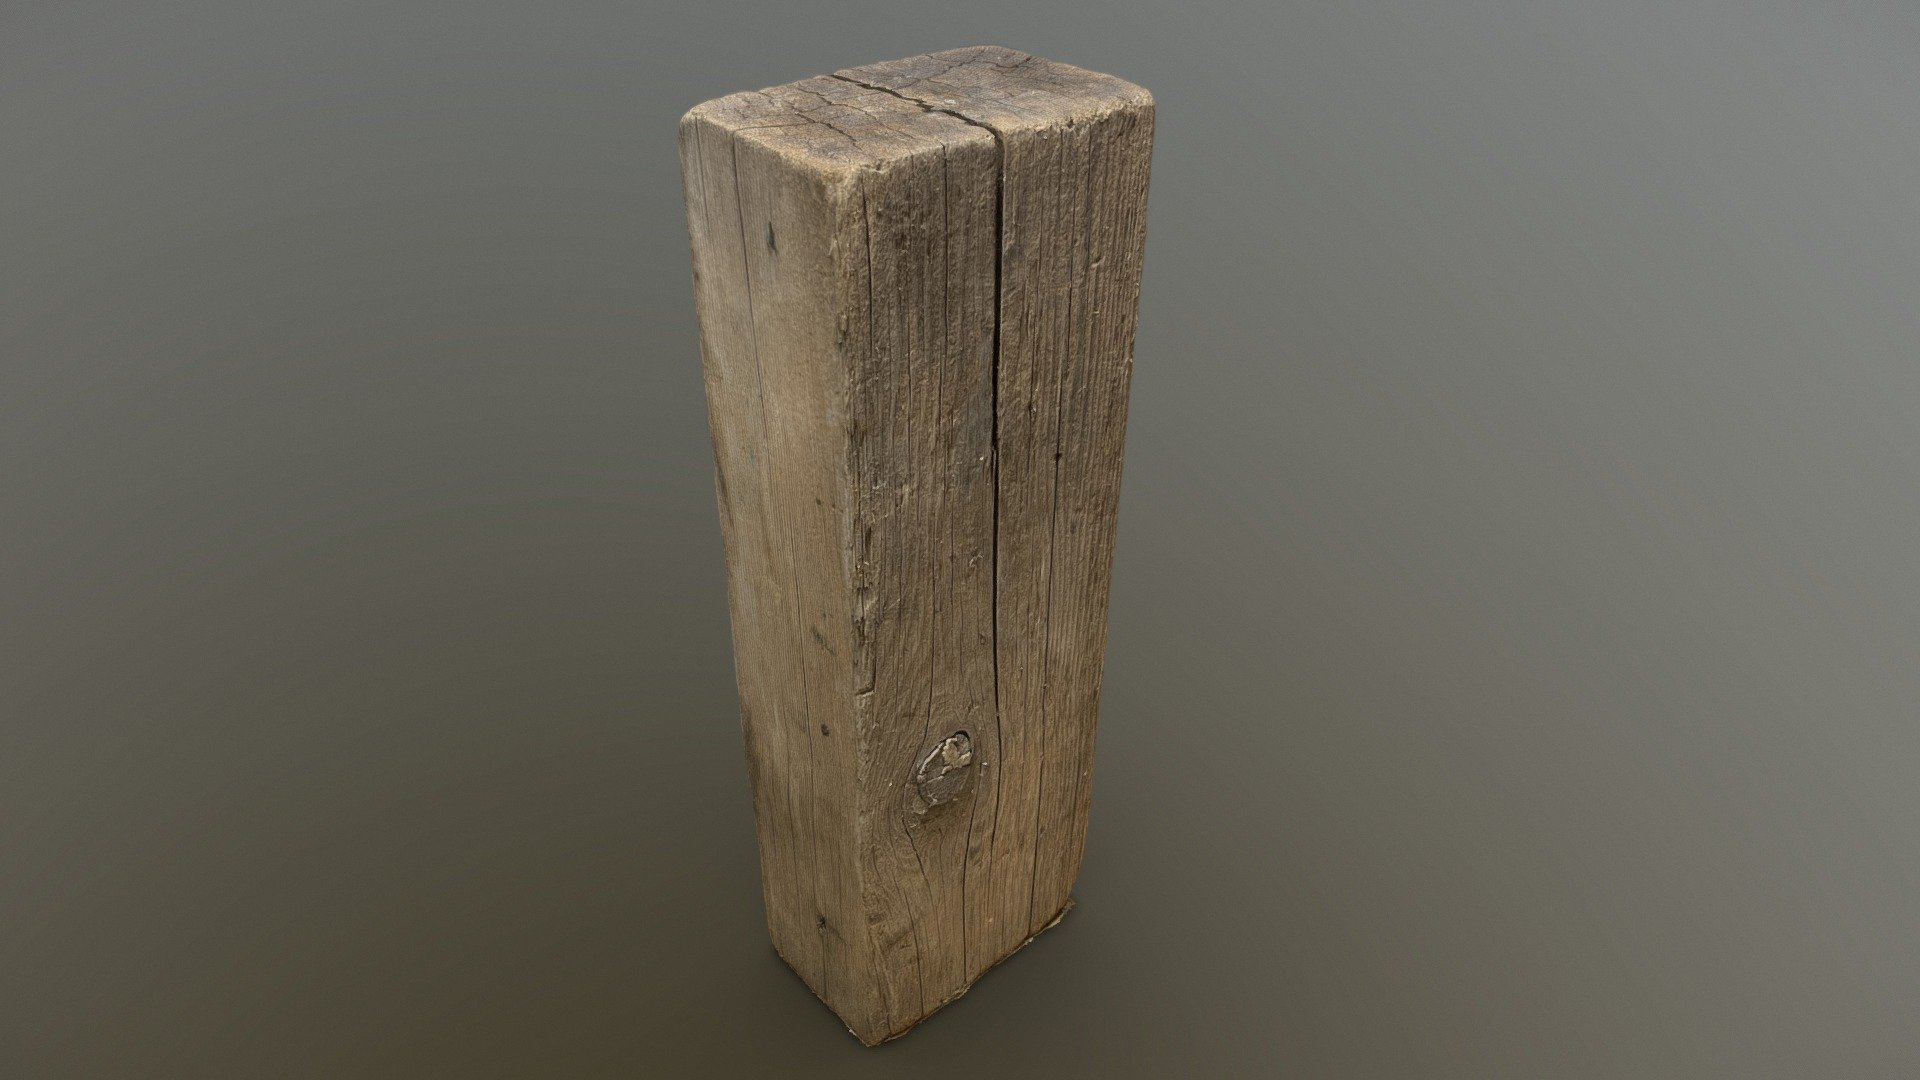 Some iPhone photos + Metashape - Wood Block Scan - Download Free 3D model by Milkislegit 3d model